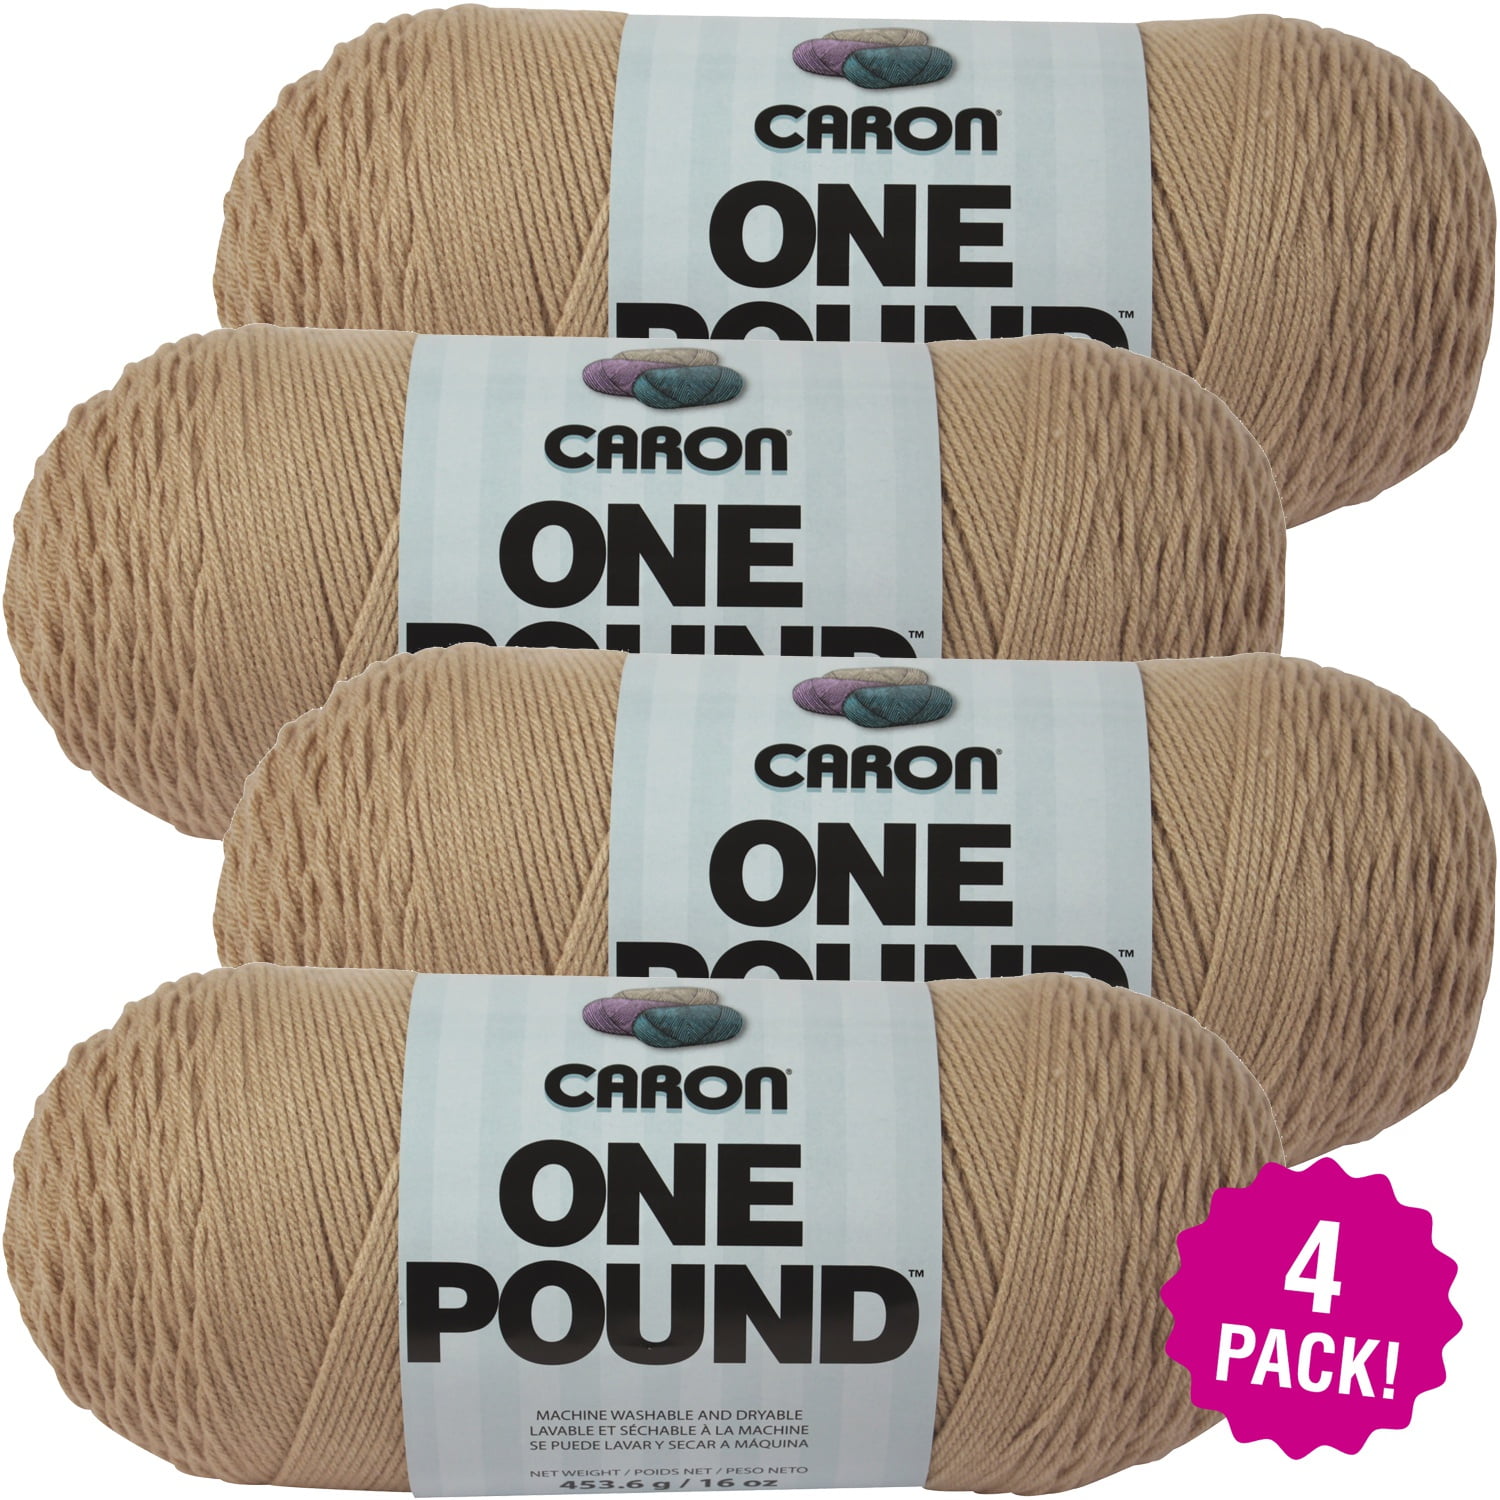 Caron One Pound Solids Yarn, 16oz, Gauge 4 Medium, 100% Acrylic - Lace -  For Crochet, Knitting & Crafting ( 1 Piece )